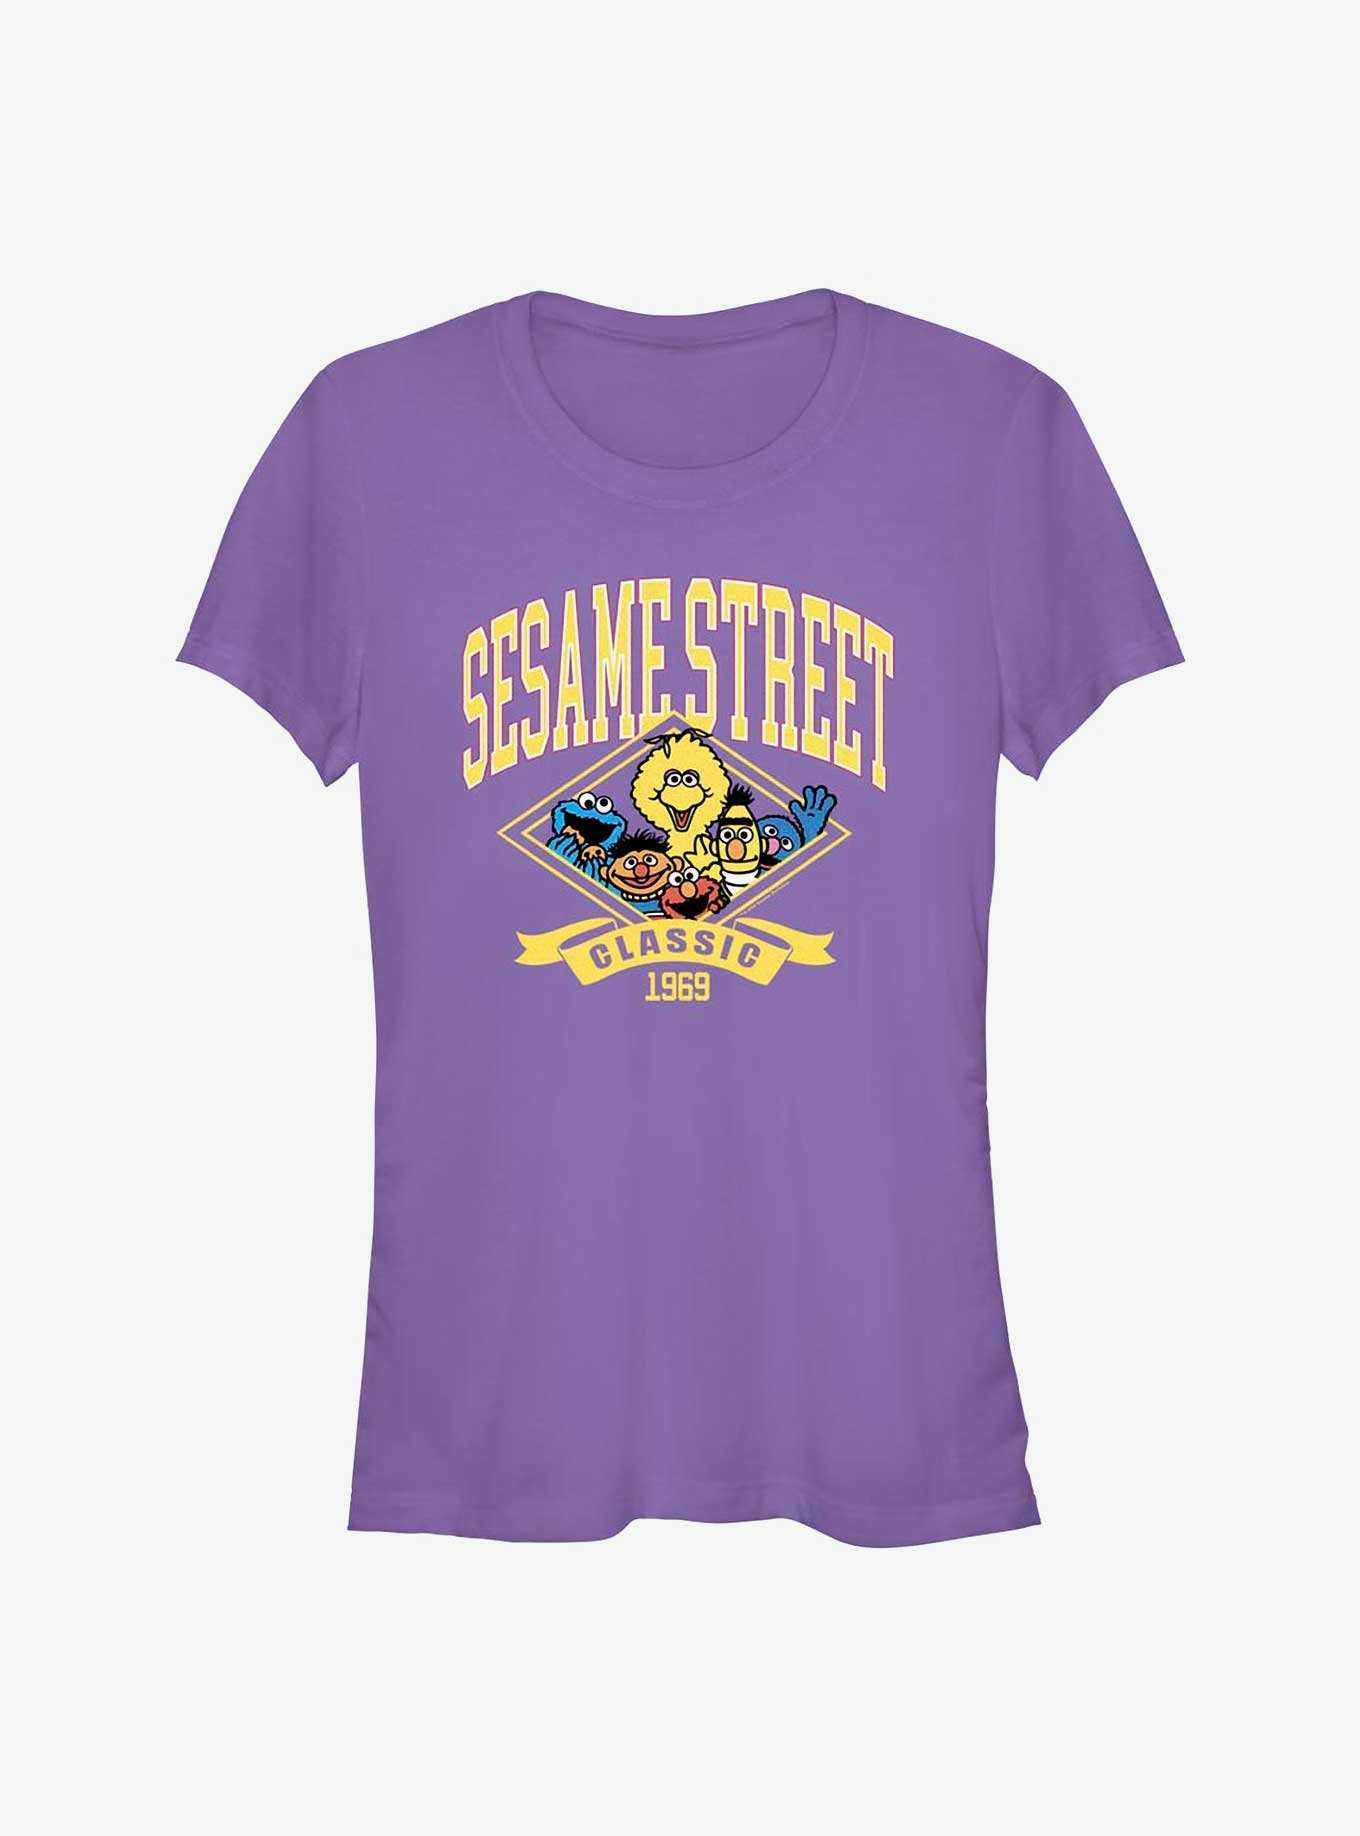 Sesame Street Classic 1969 Girls T-Shirt, , hi-res